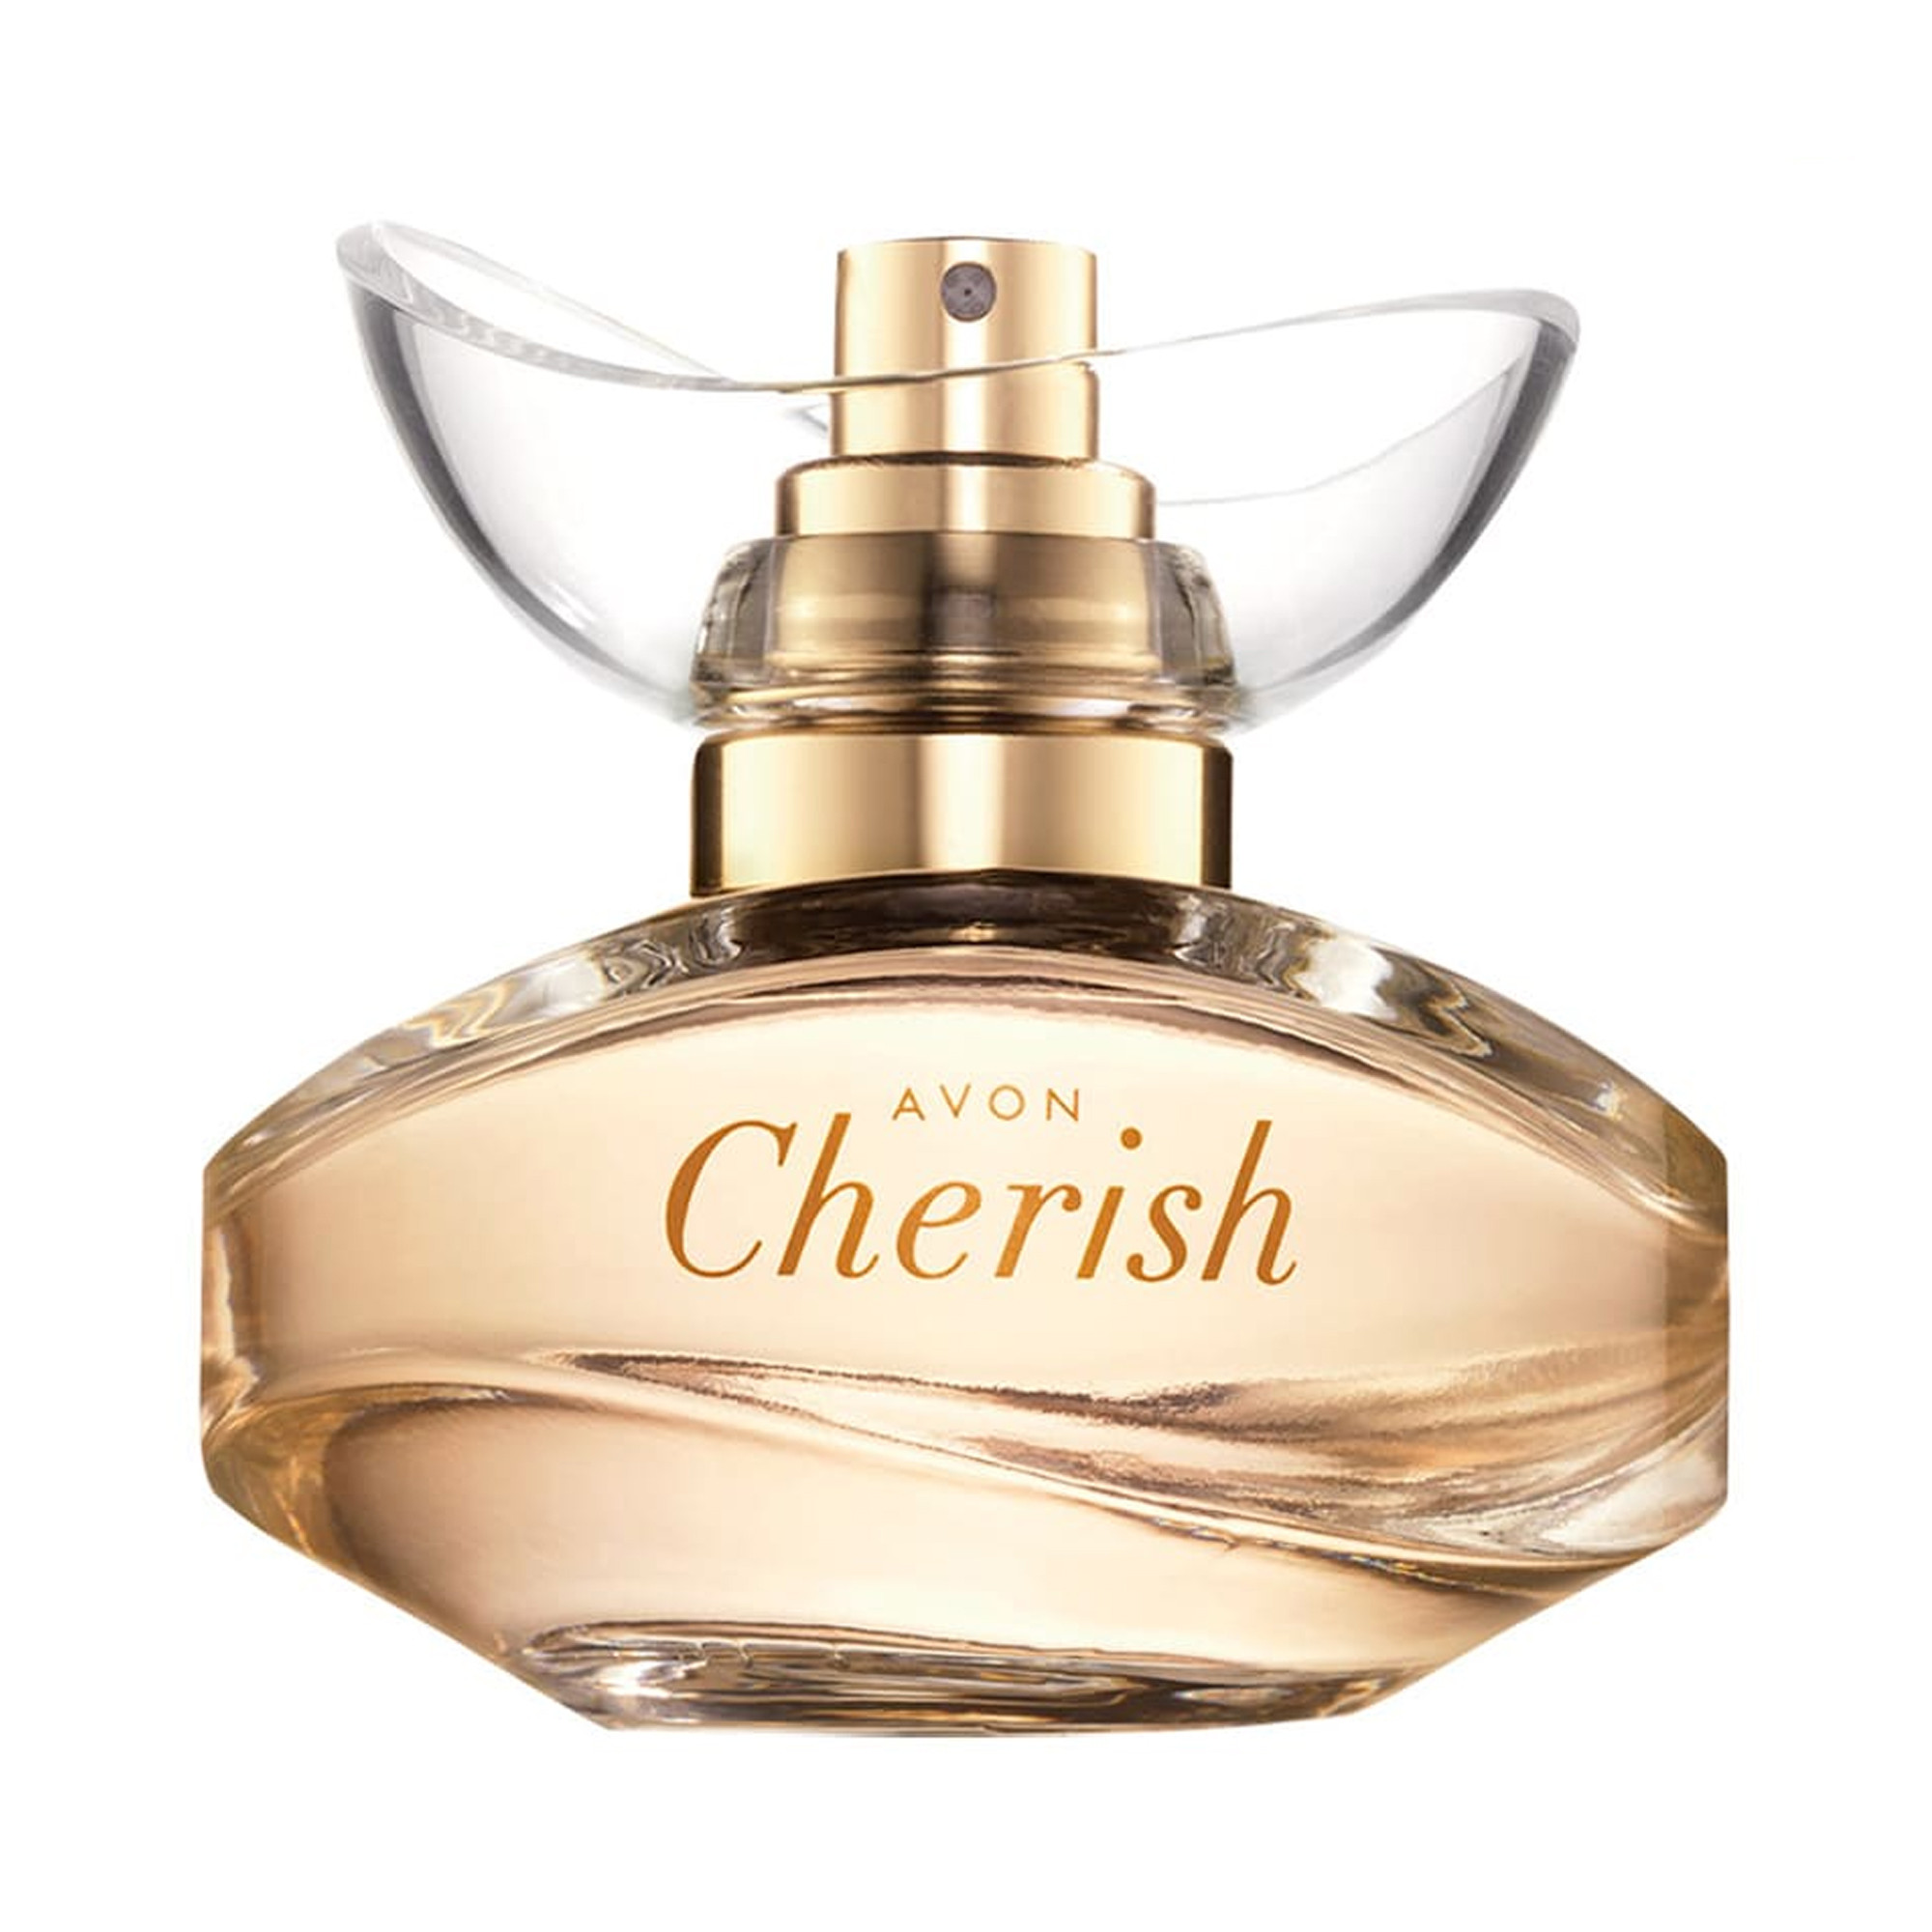 Avon Cherish Eau de Parfum 50ml